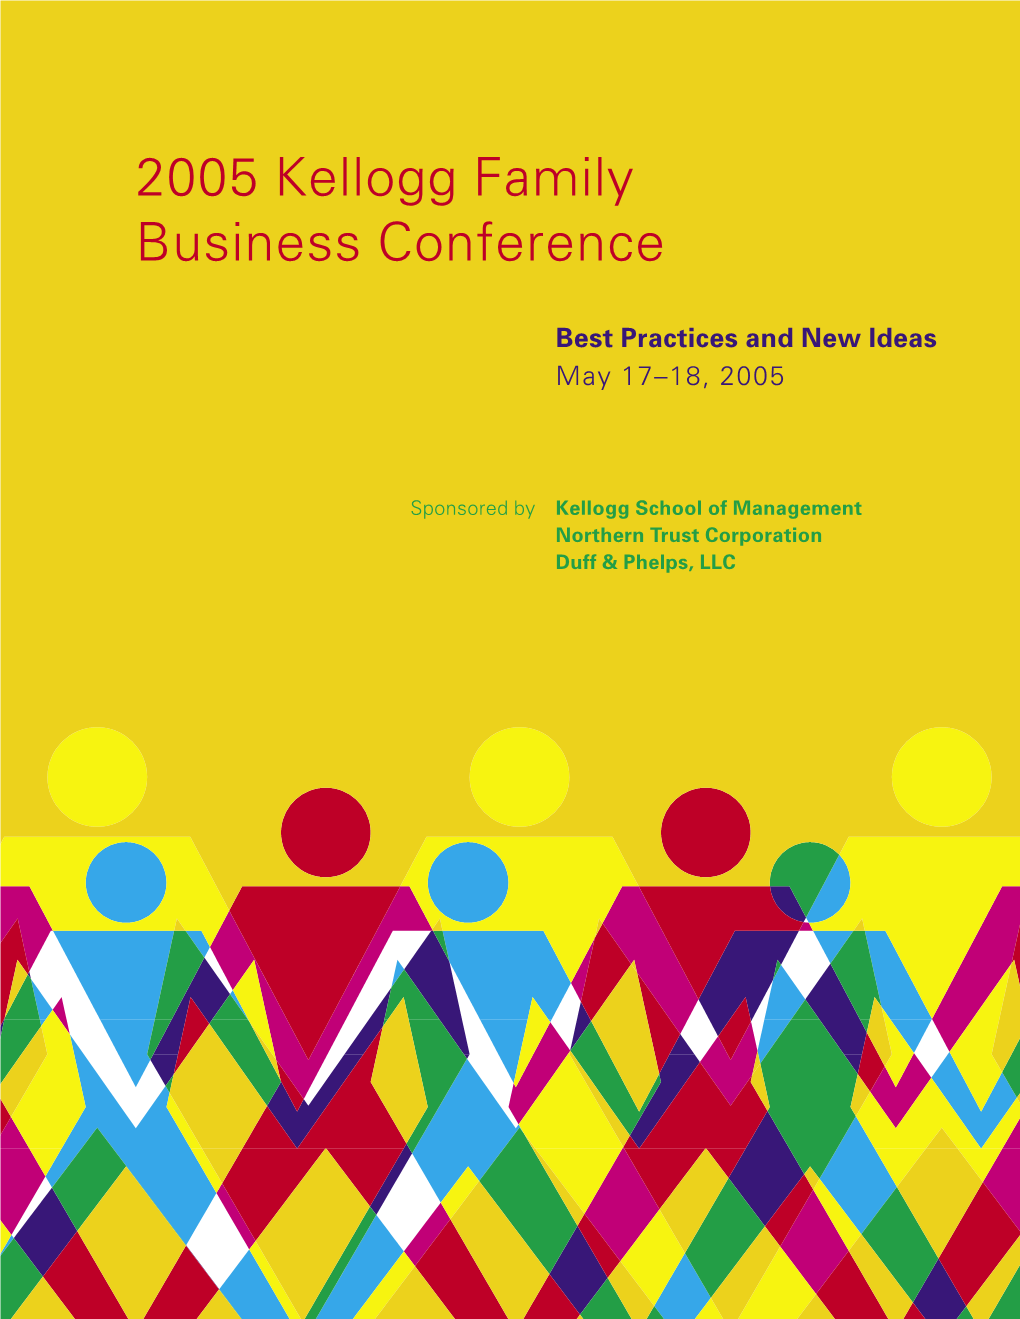 2005 Kellogg Family Business Conference Business Family Kellogg 2005